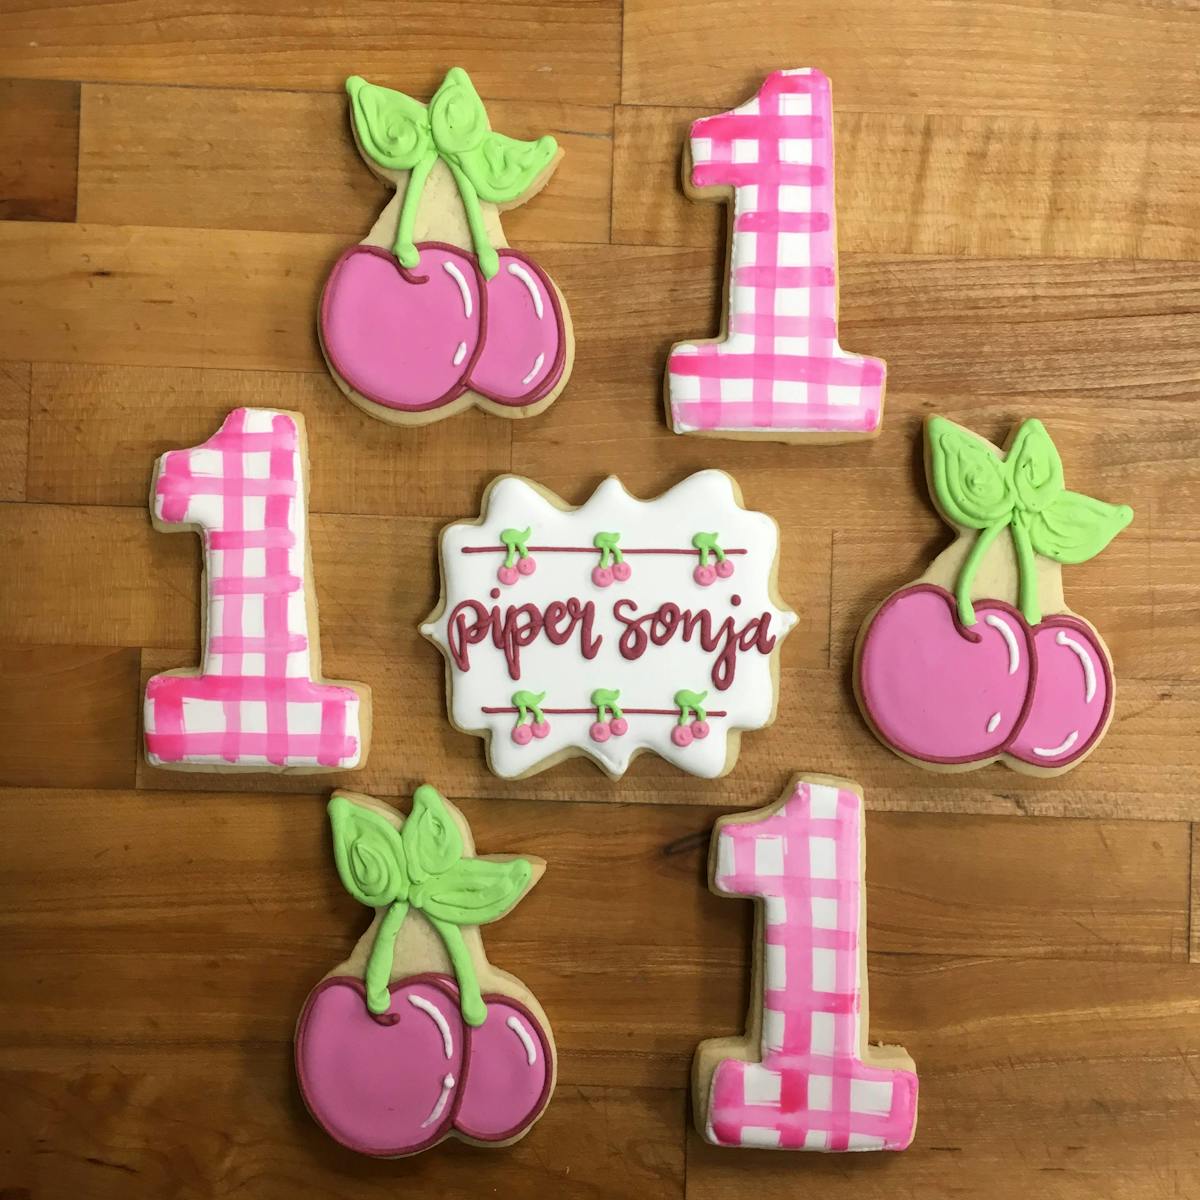 #1 Cherry birthday themed cookies